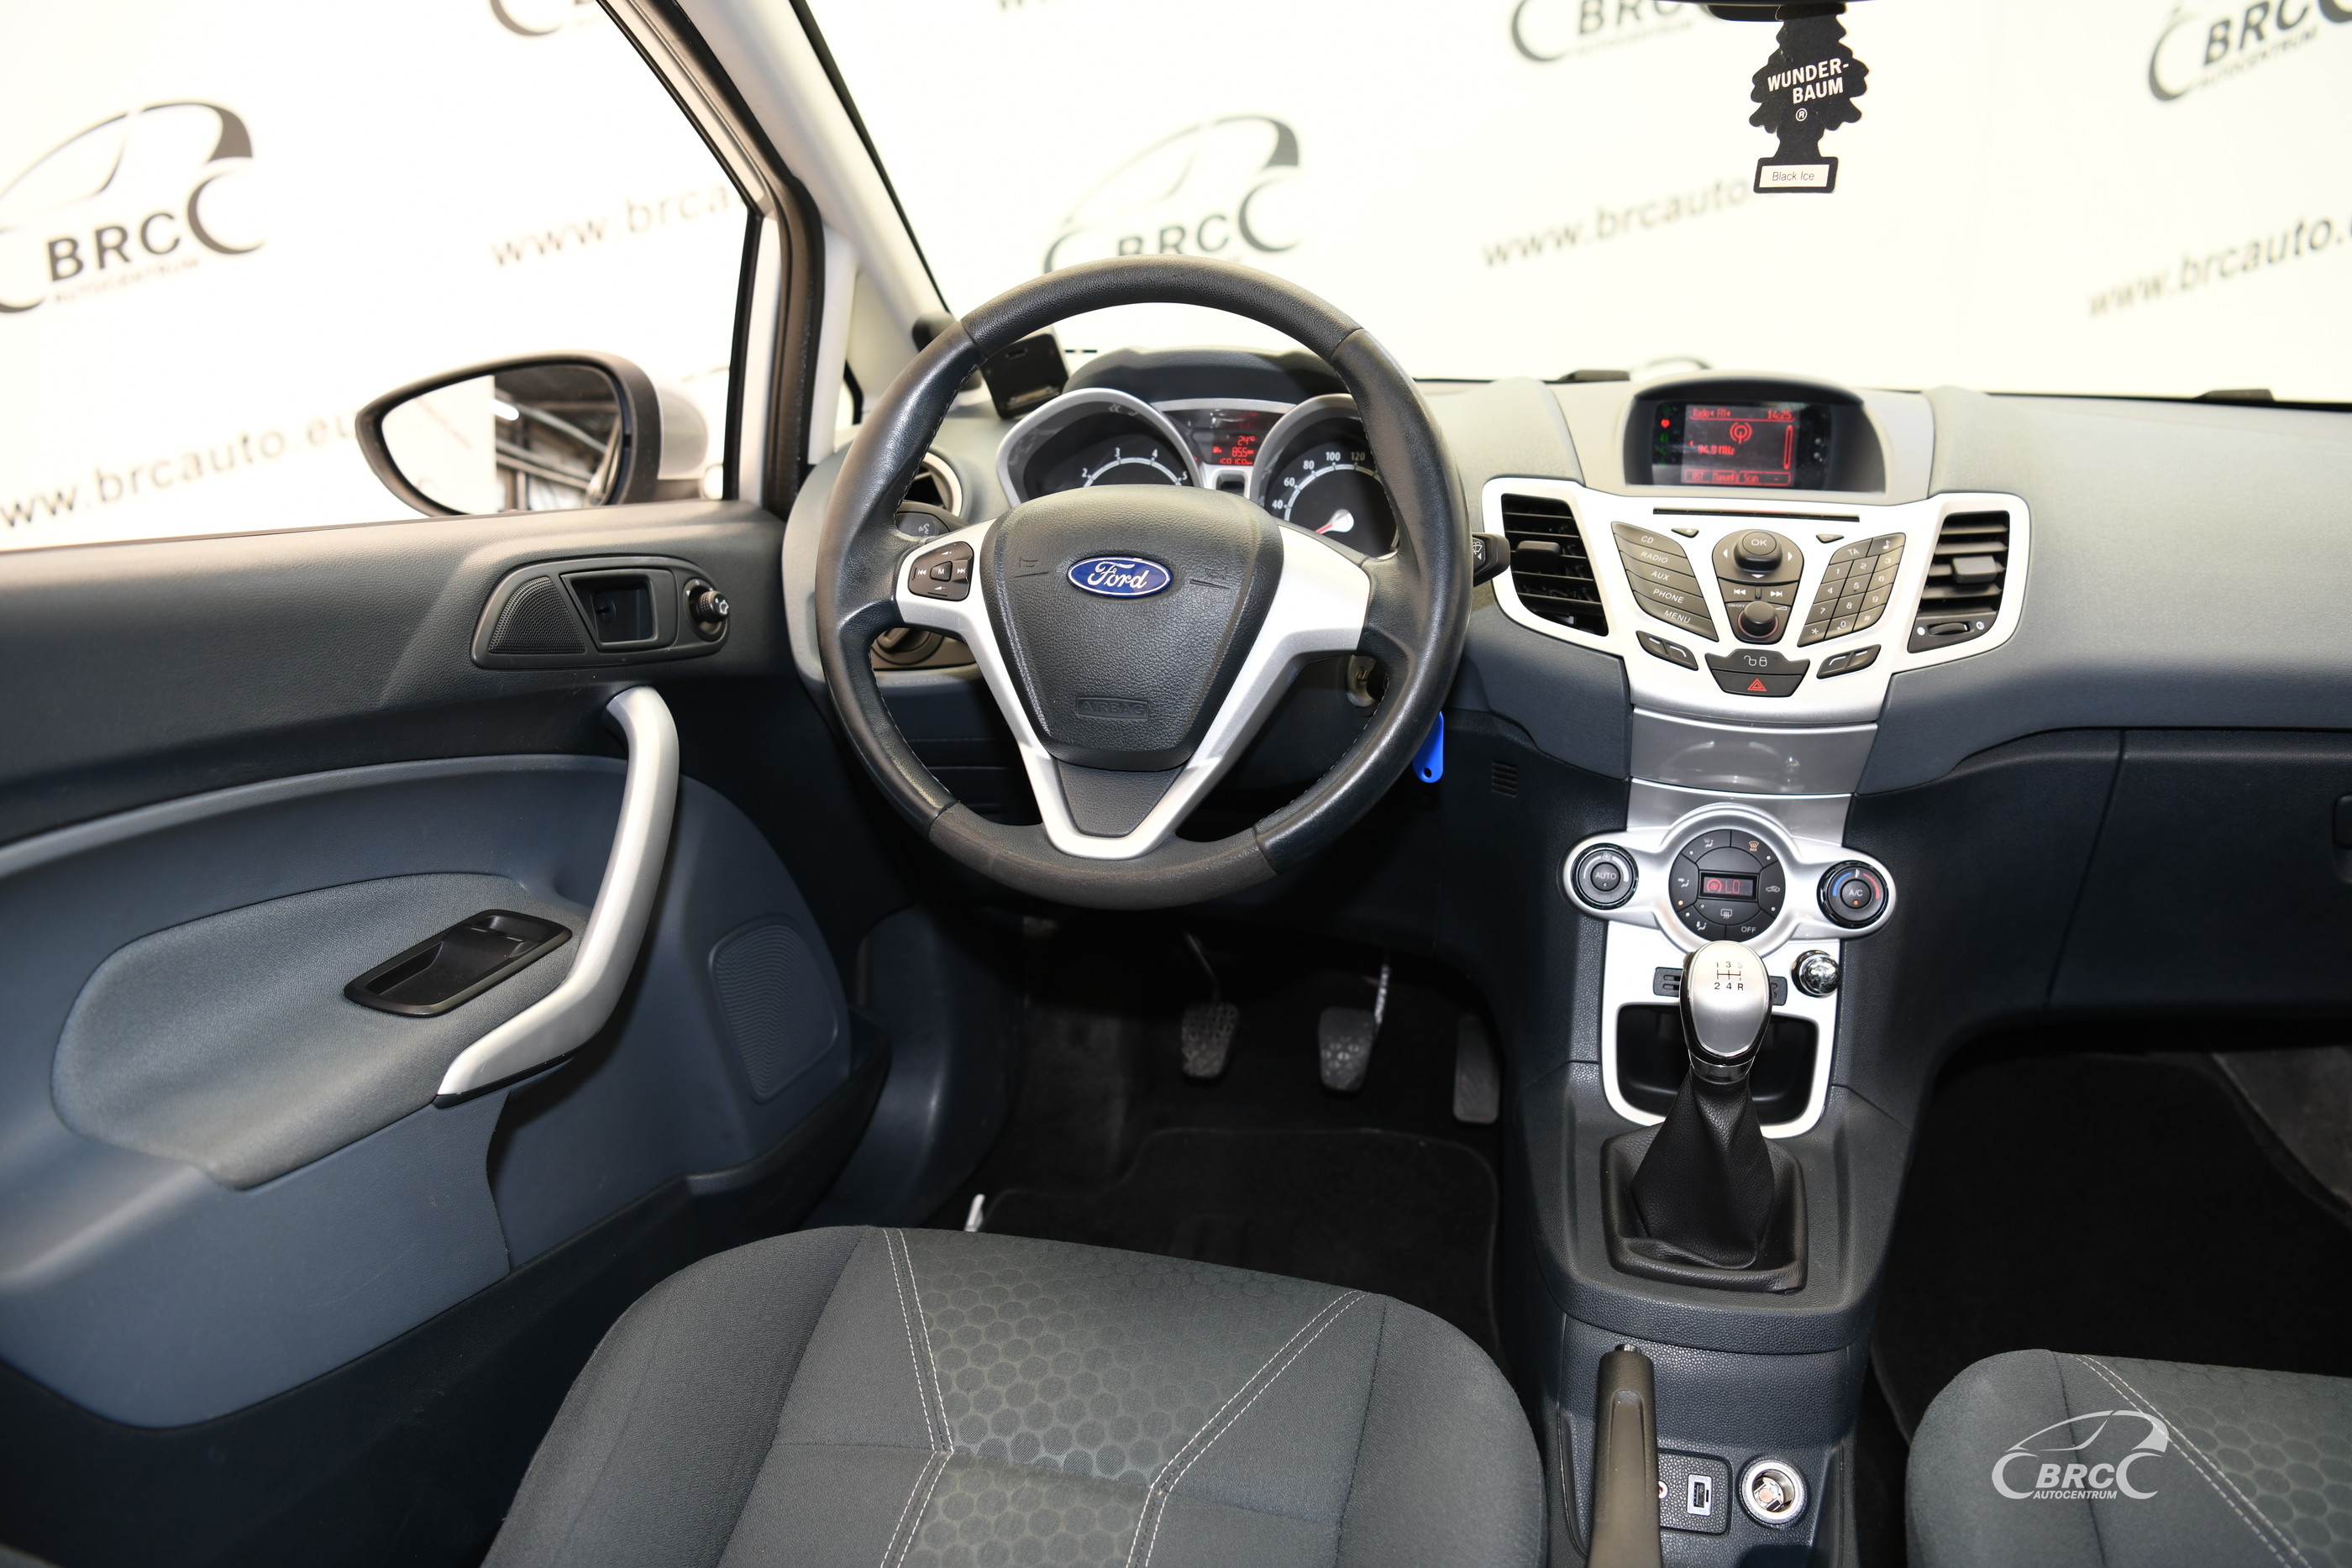 Ford Fiesta 1.2 Trend